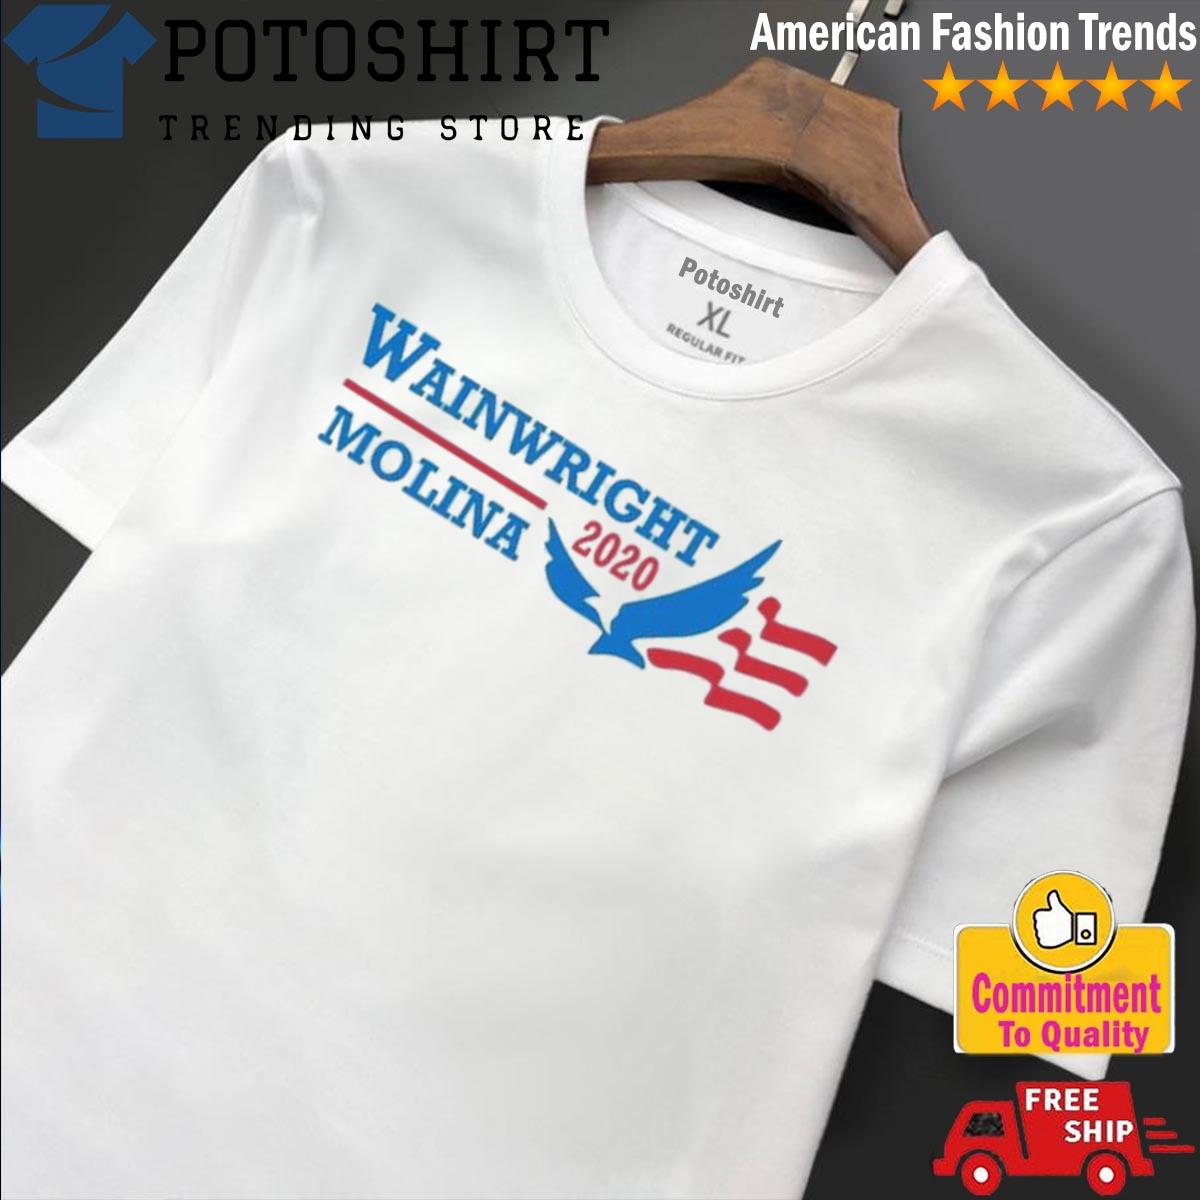 Wainwright Molina 2020 Tee Shirt, Custom prints store